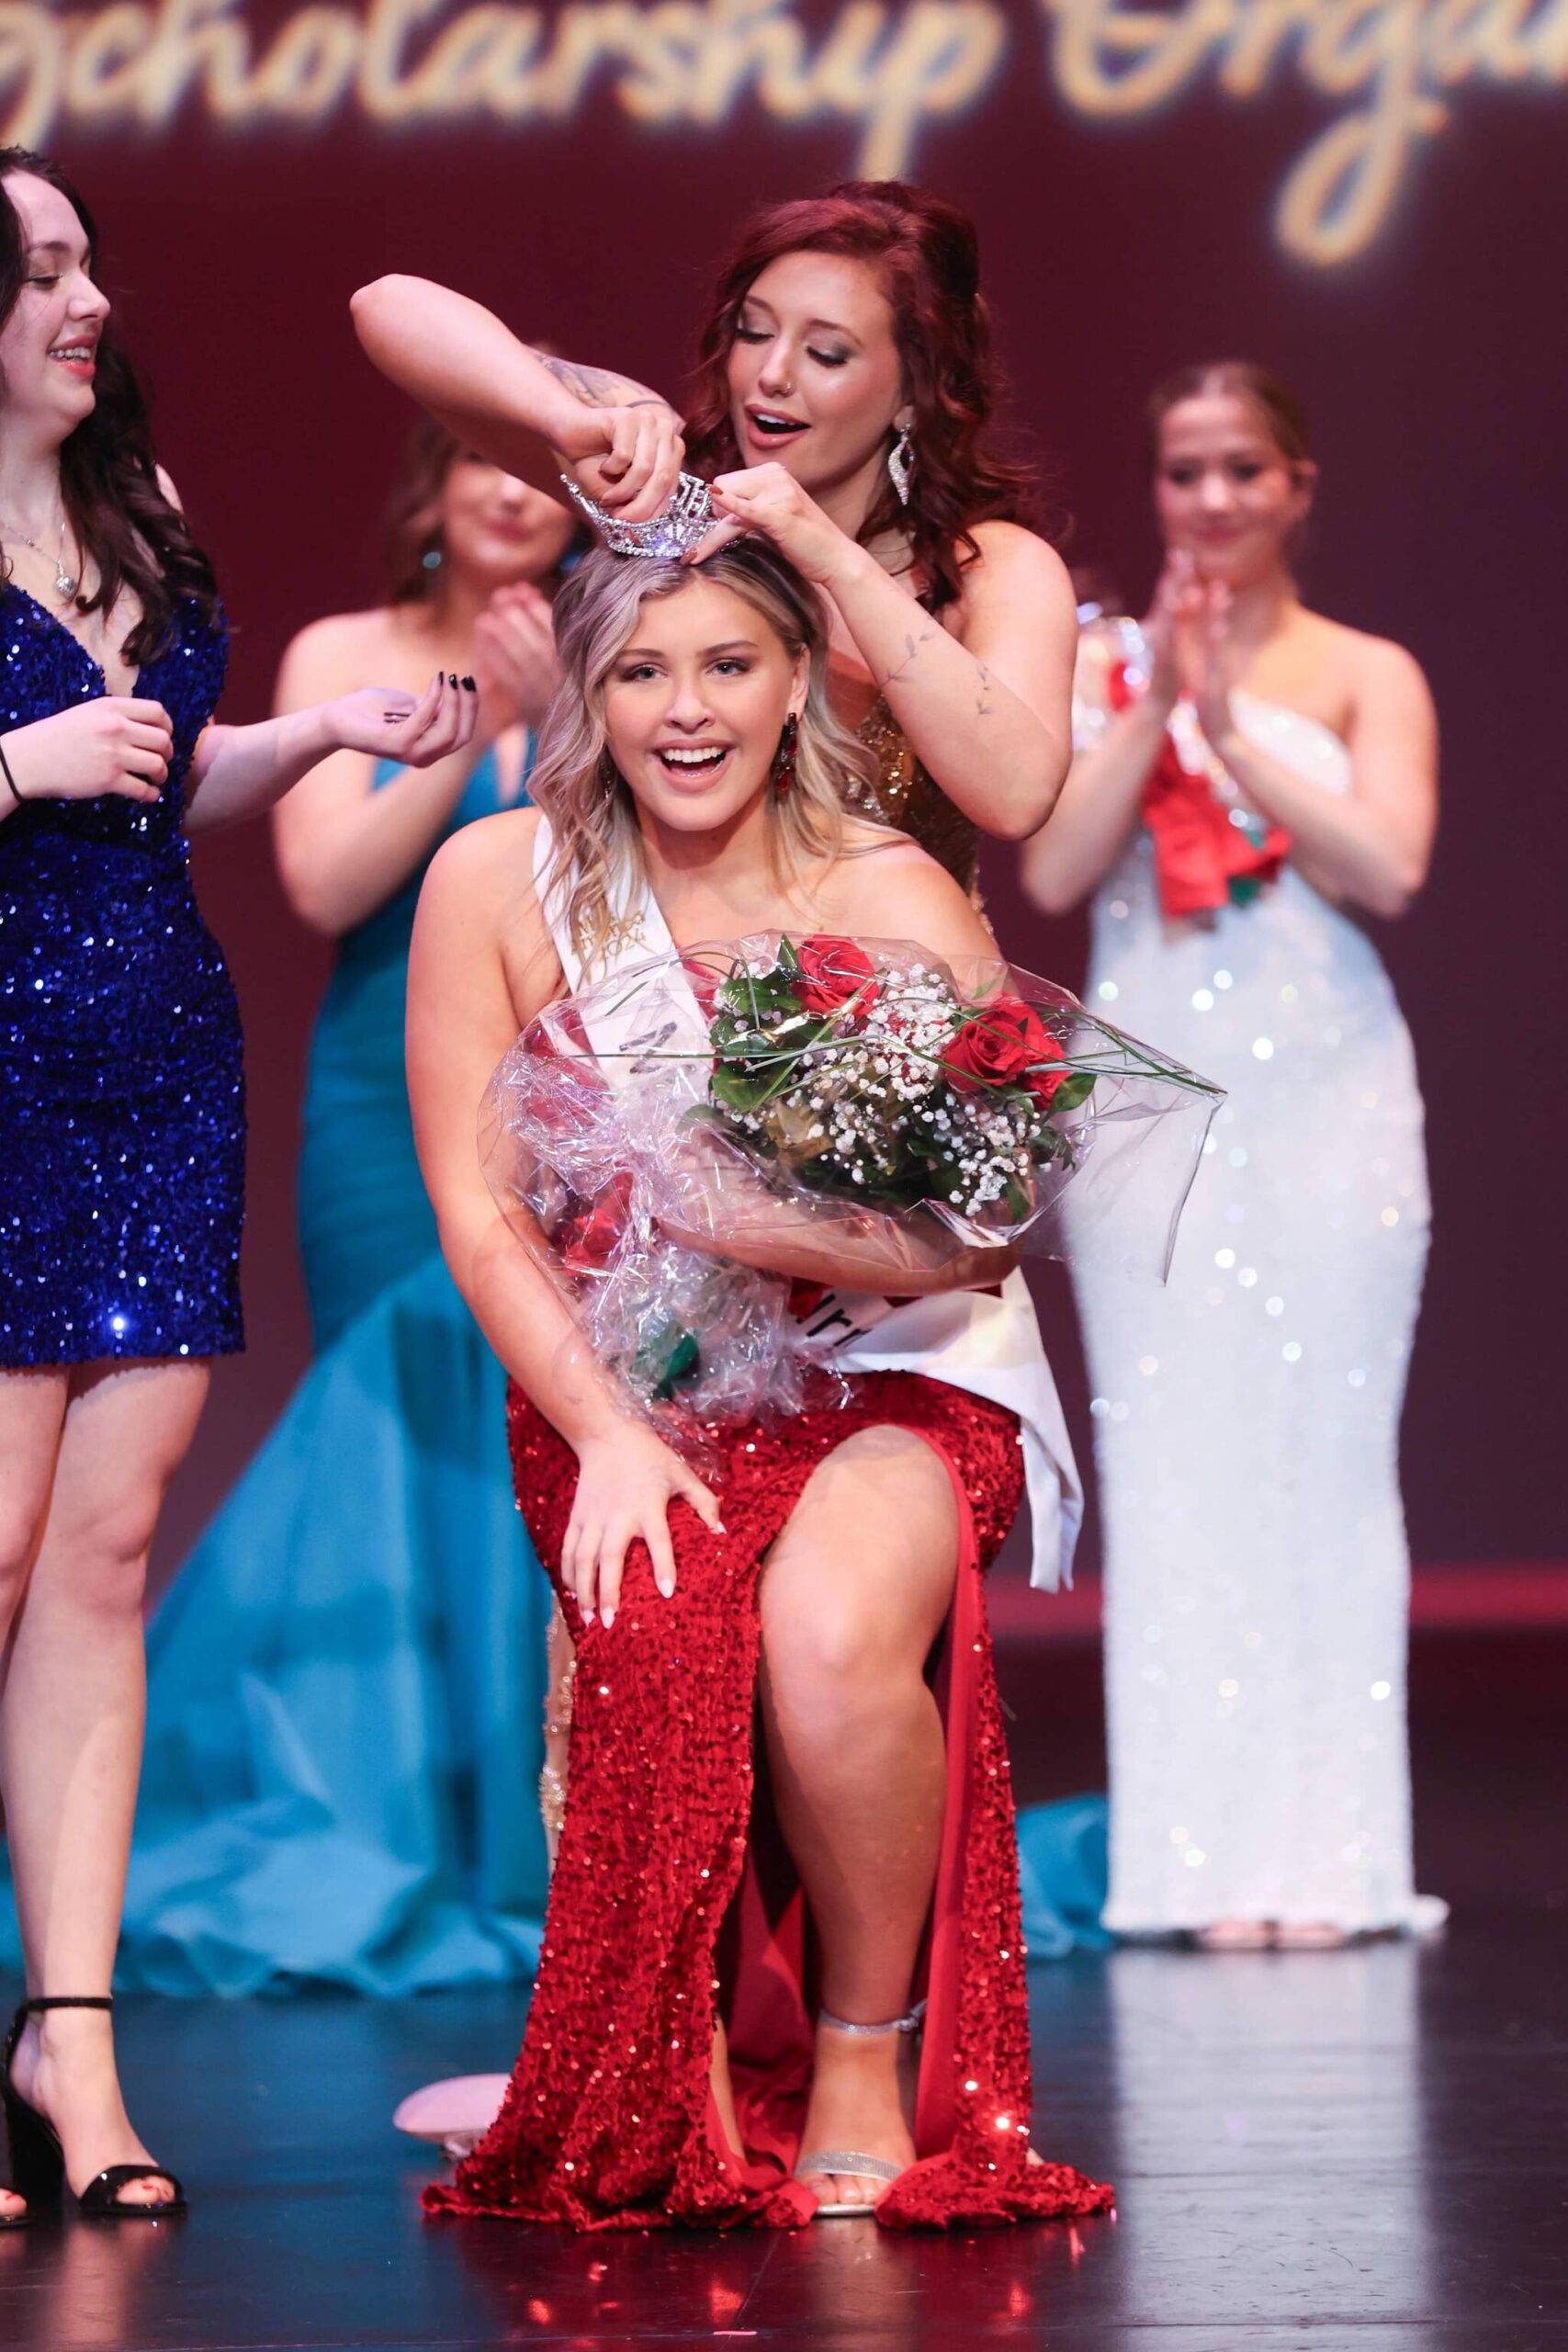 Photo courtesy City of Auburn
Maddy Lindsay won the Miss Auburn crown last weekend.